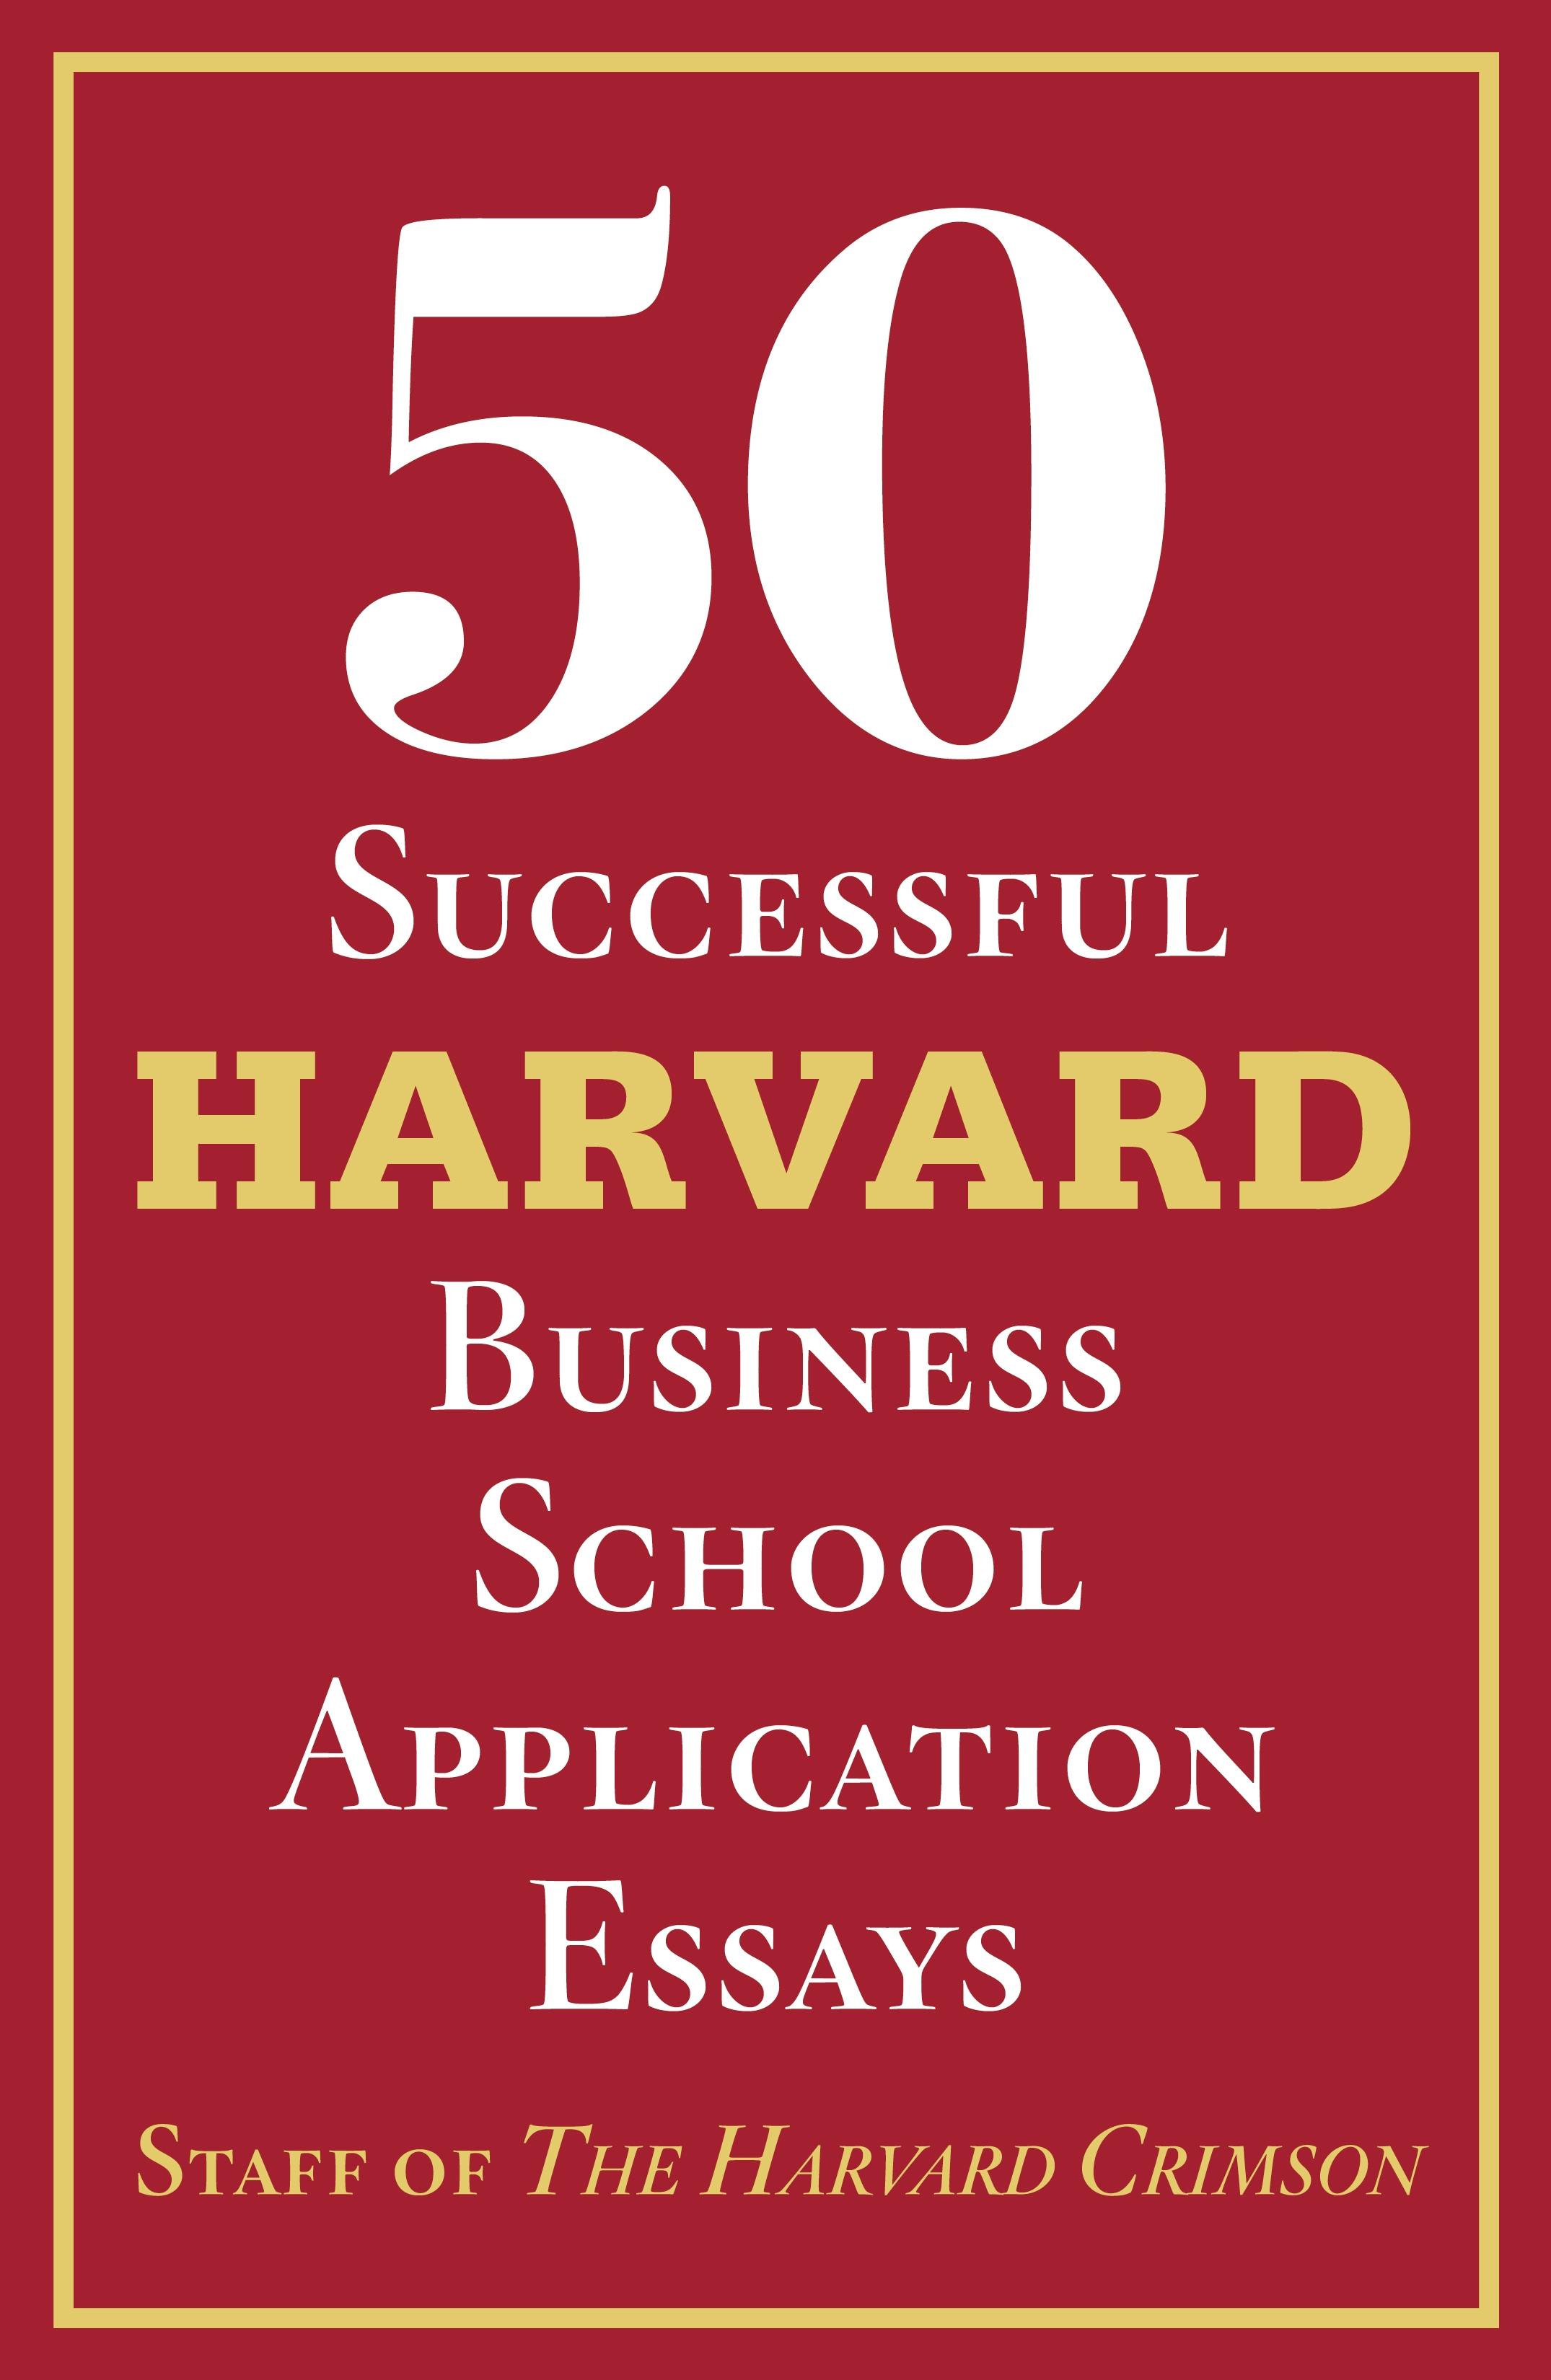 PRIDE - Clubs - MBA - Harvard Business School